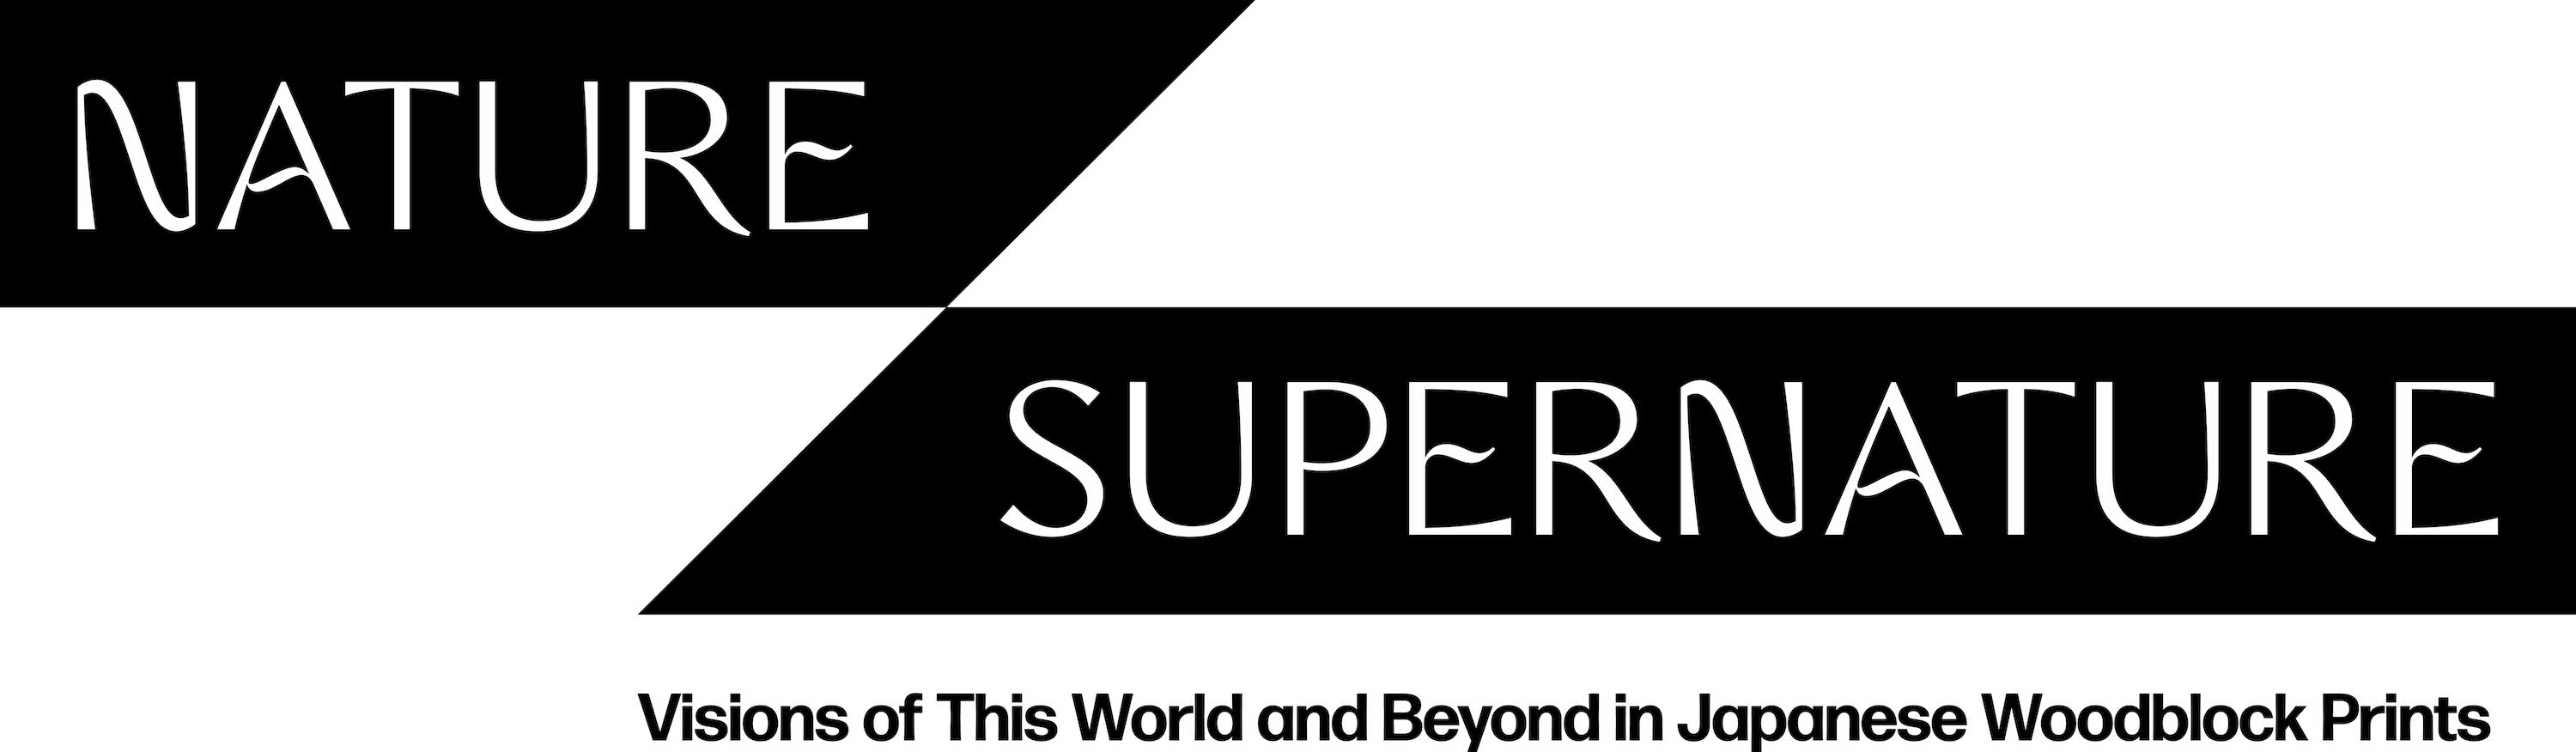 Nature/Supernature exhibition logo